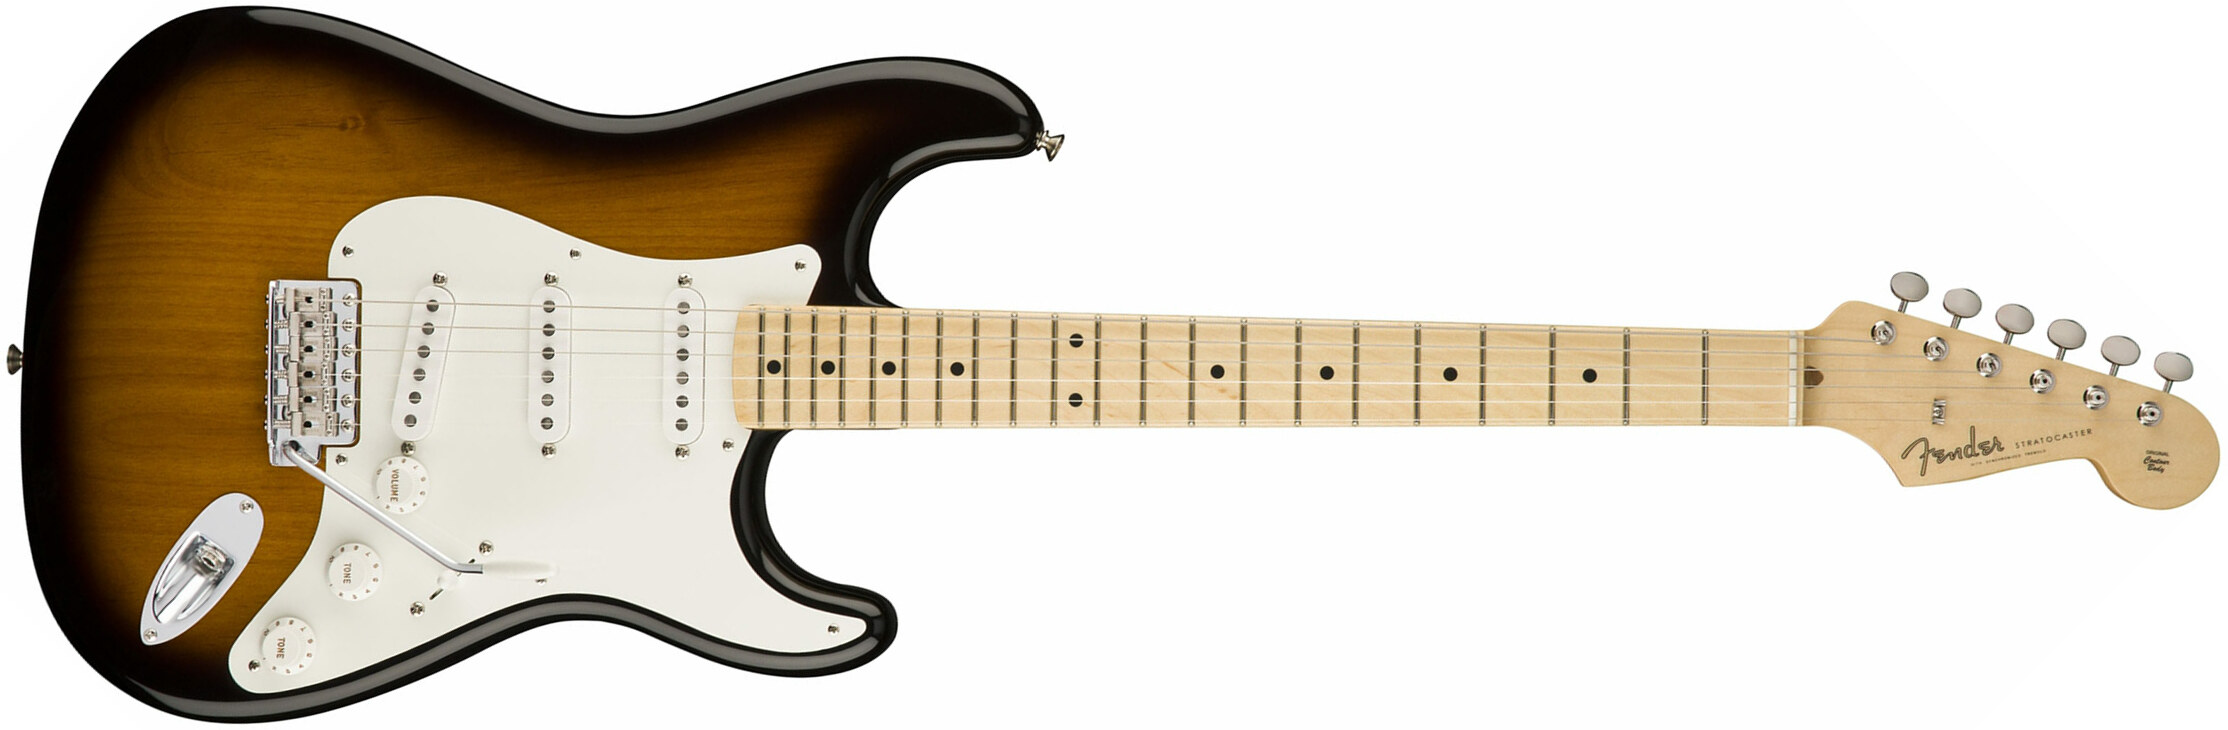 Fender Strat '50s American Original Usa Sss Mn - 2-color Sunburst - Str shape electric guitar - Main picture